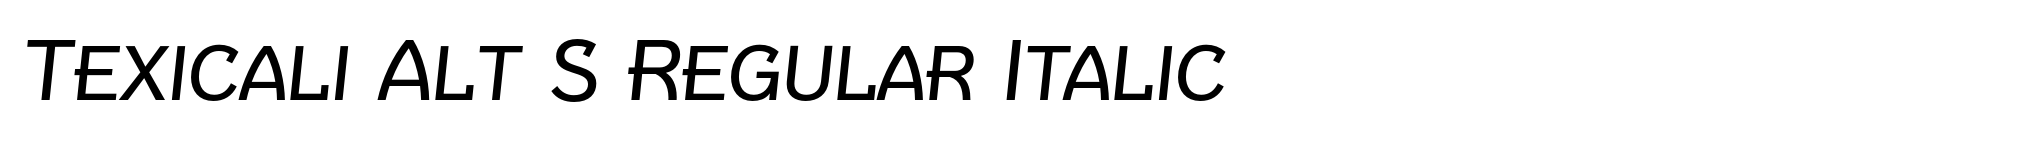 Texicali Alt S Regular Italic image